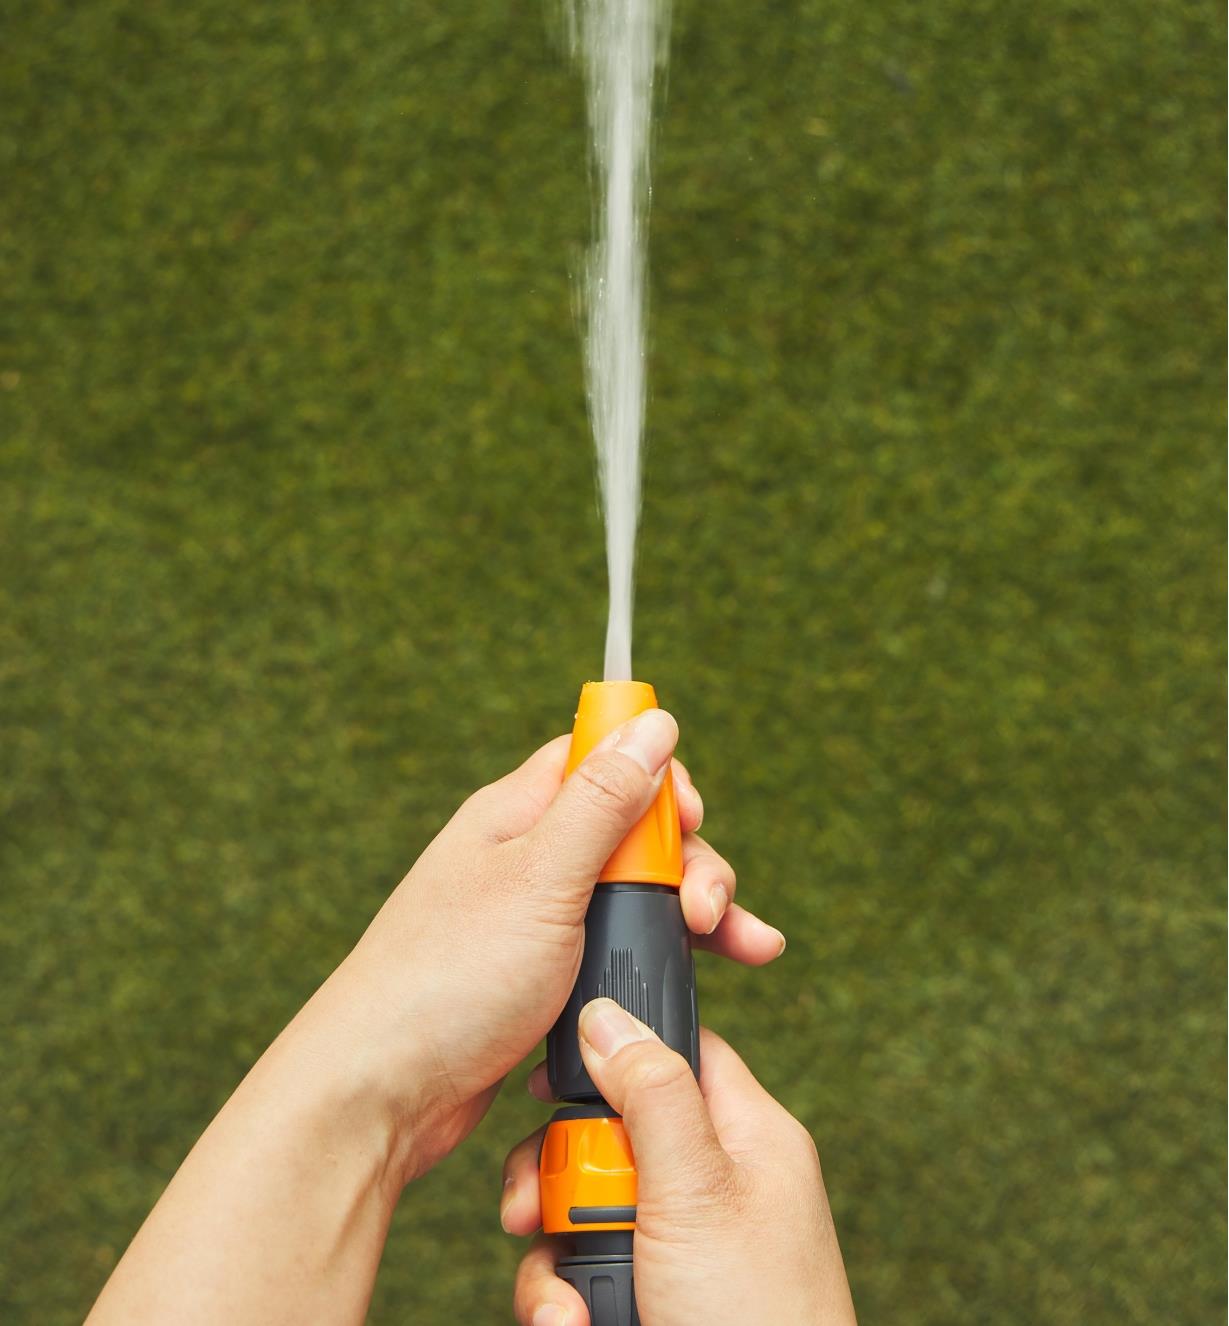 The spray gun on the hose sprays a jet stream of water